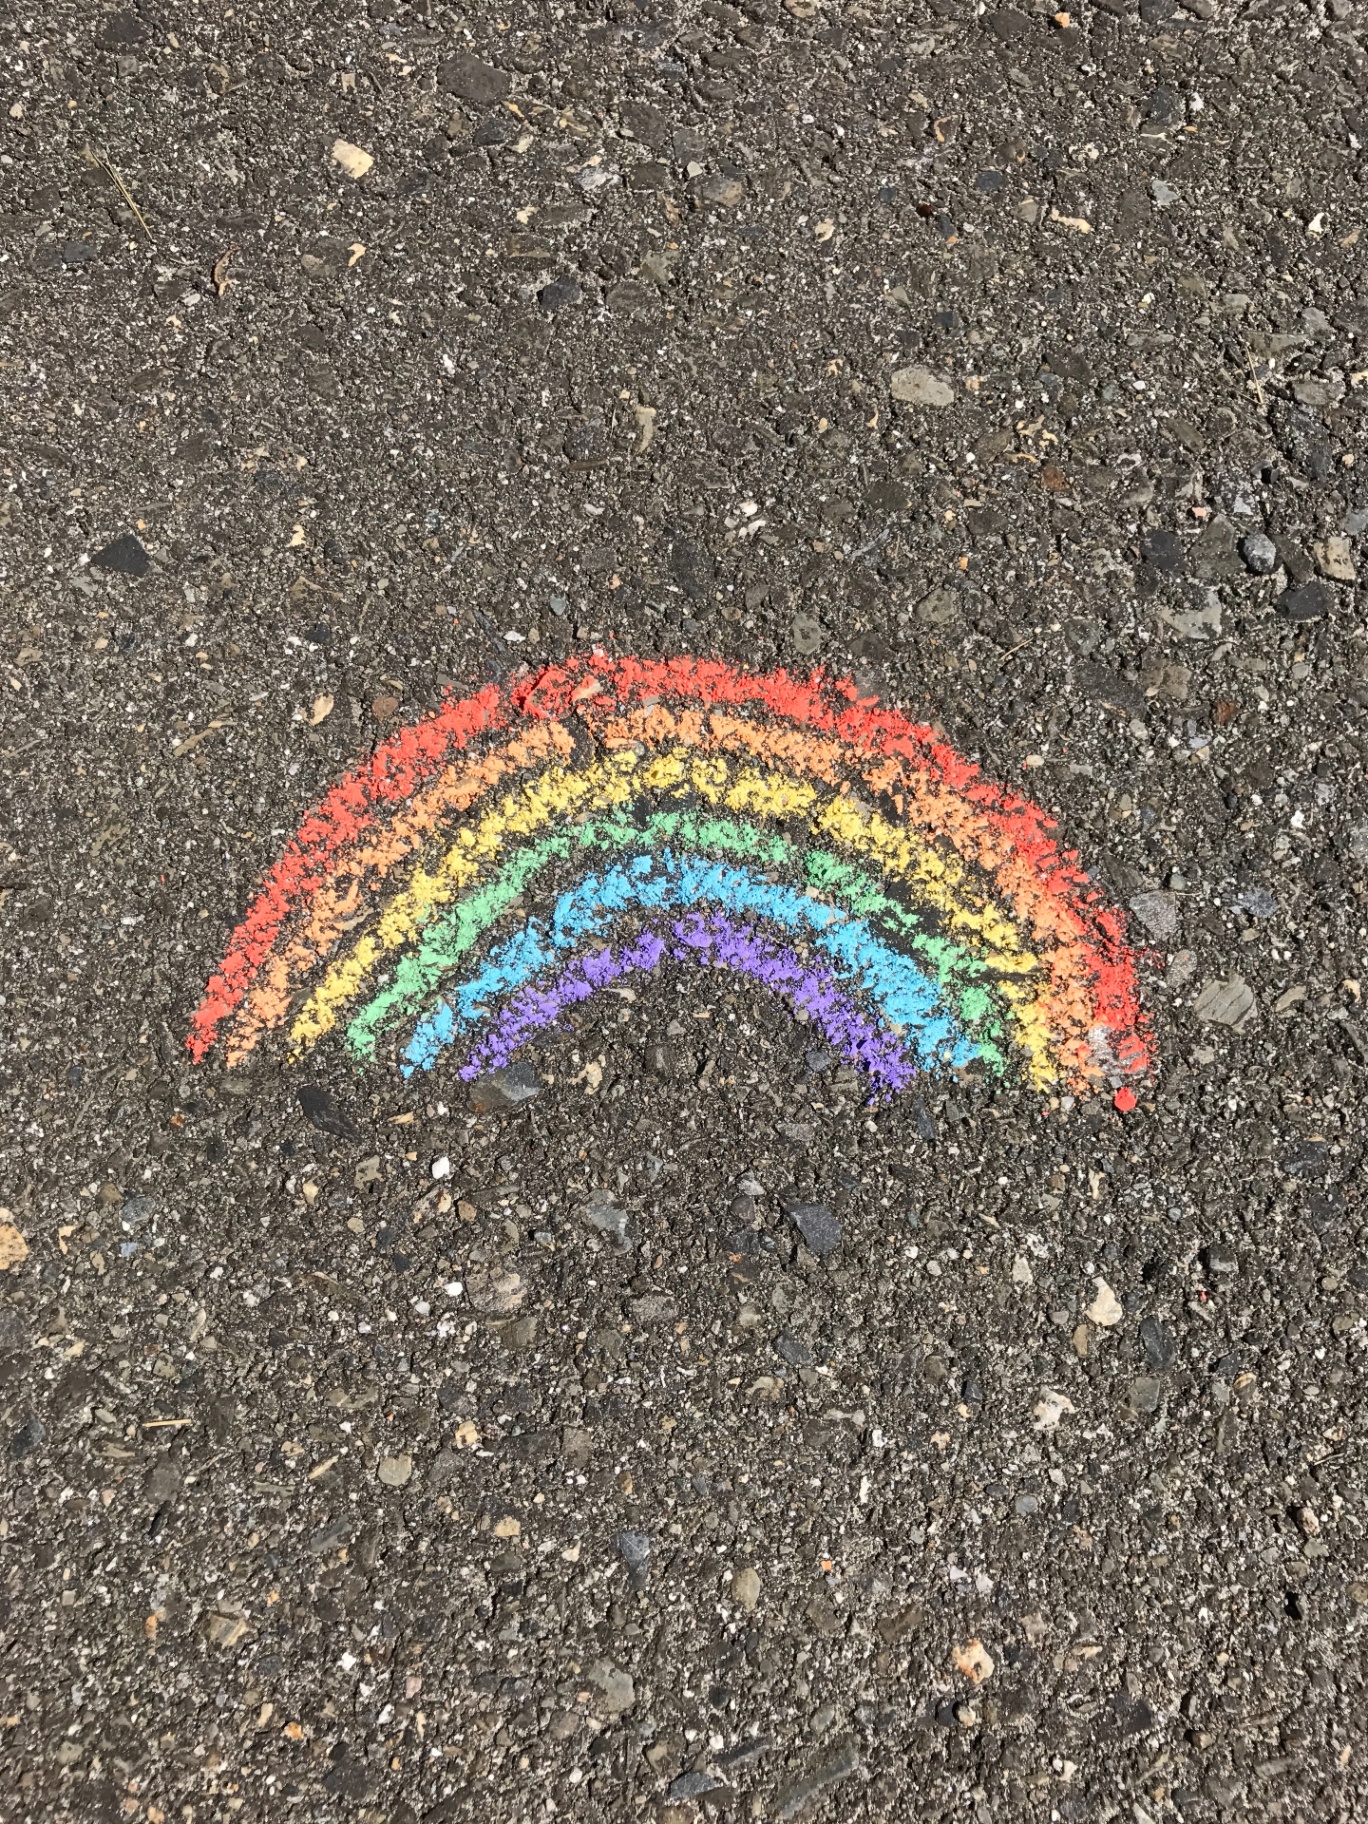 Rainbow drawing on the street